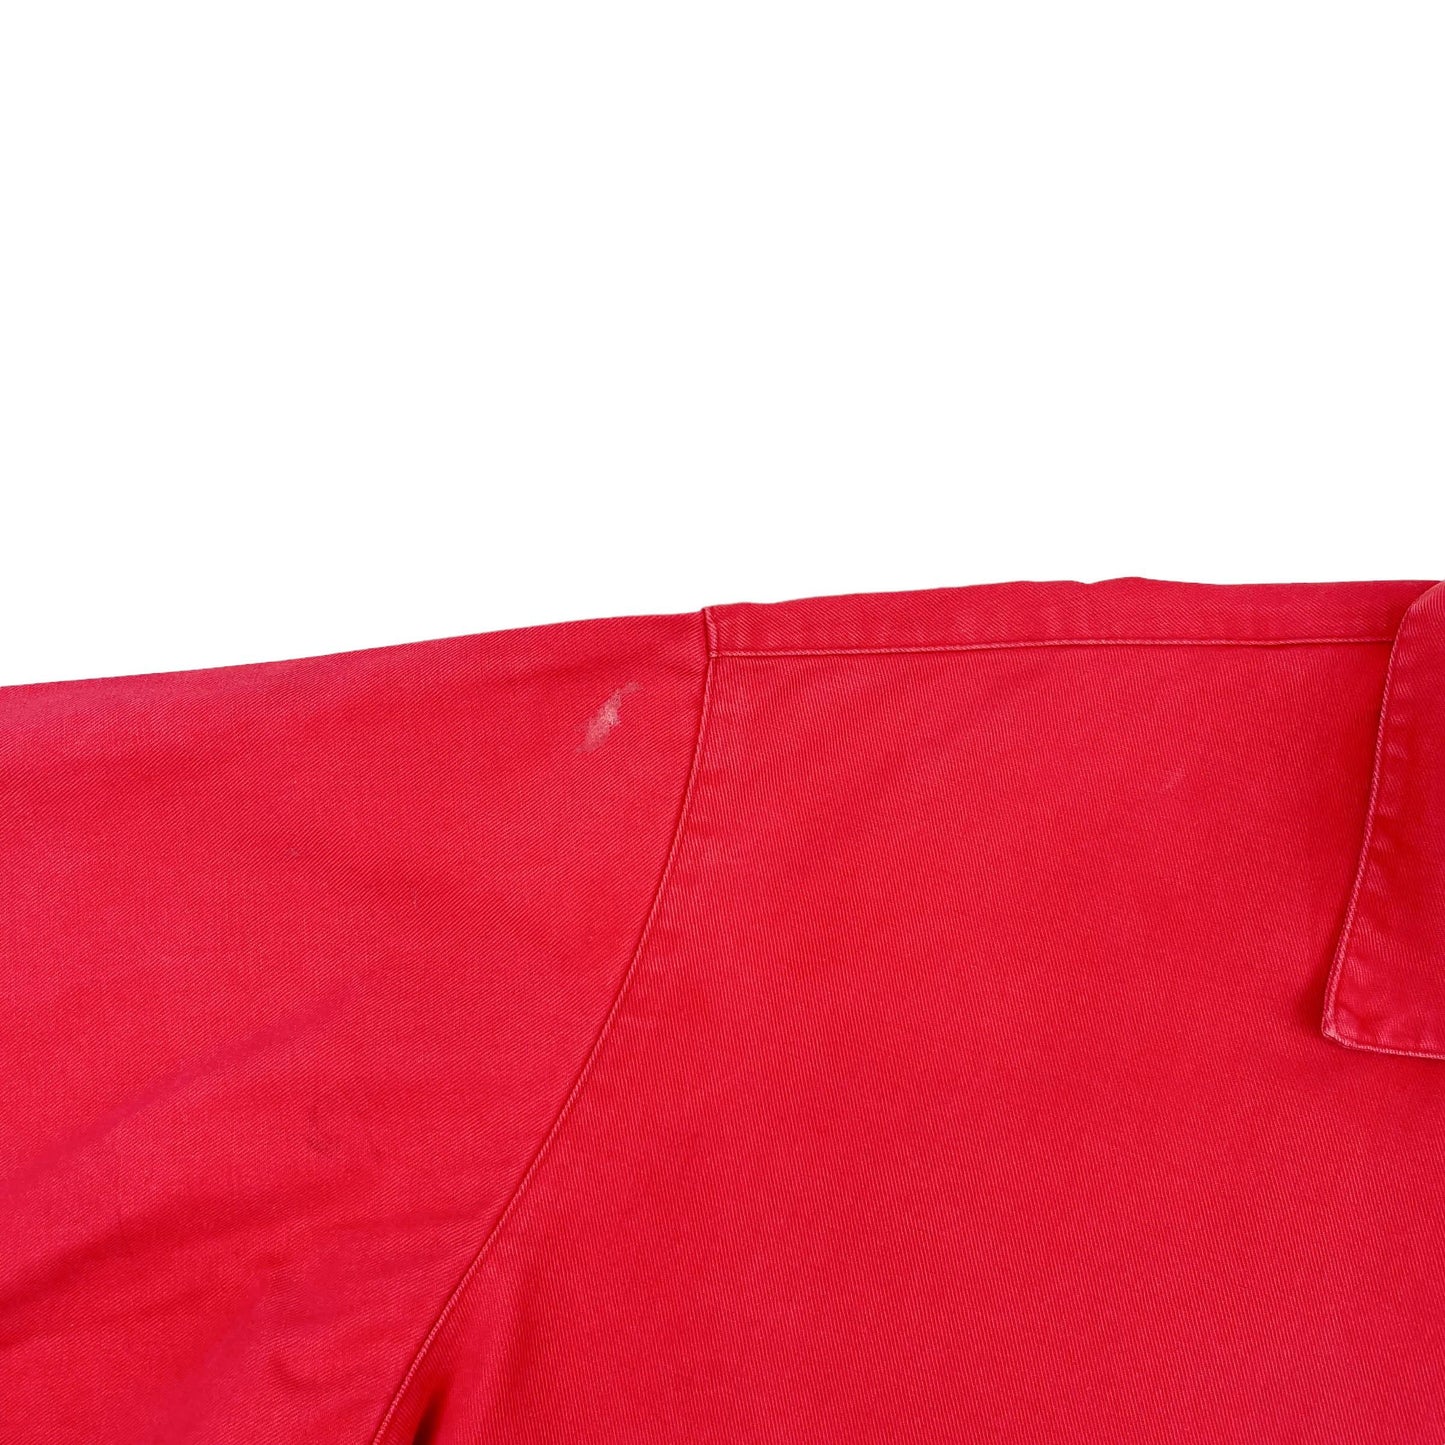 Vintage YSL Harrington Jacket (L) - Known Source